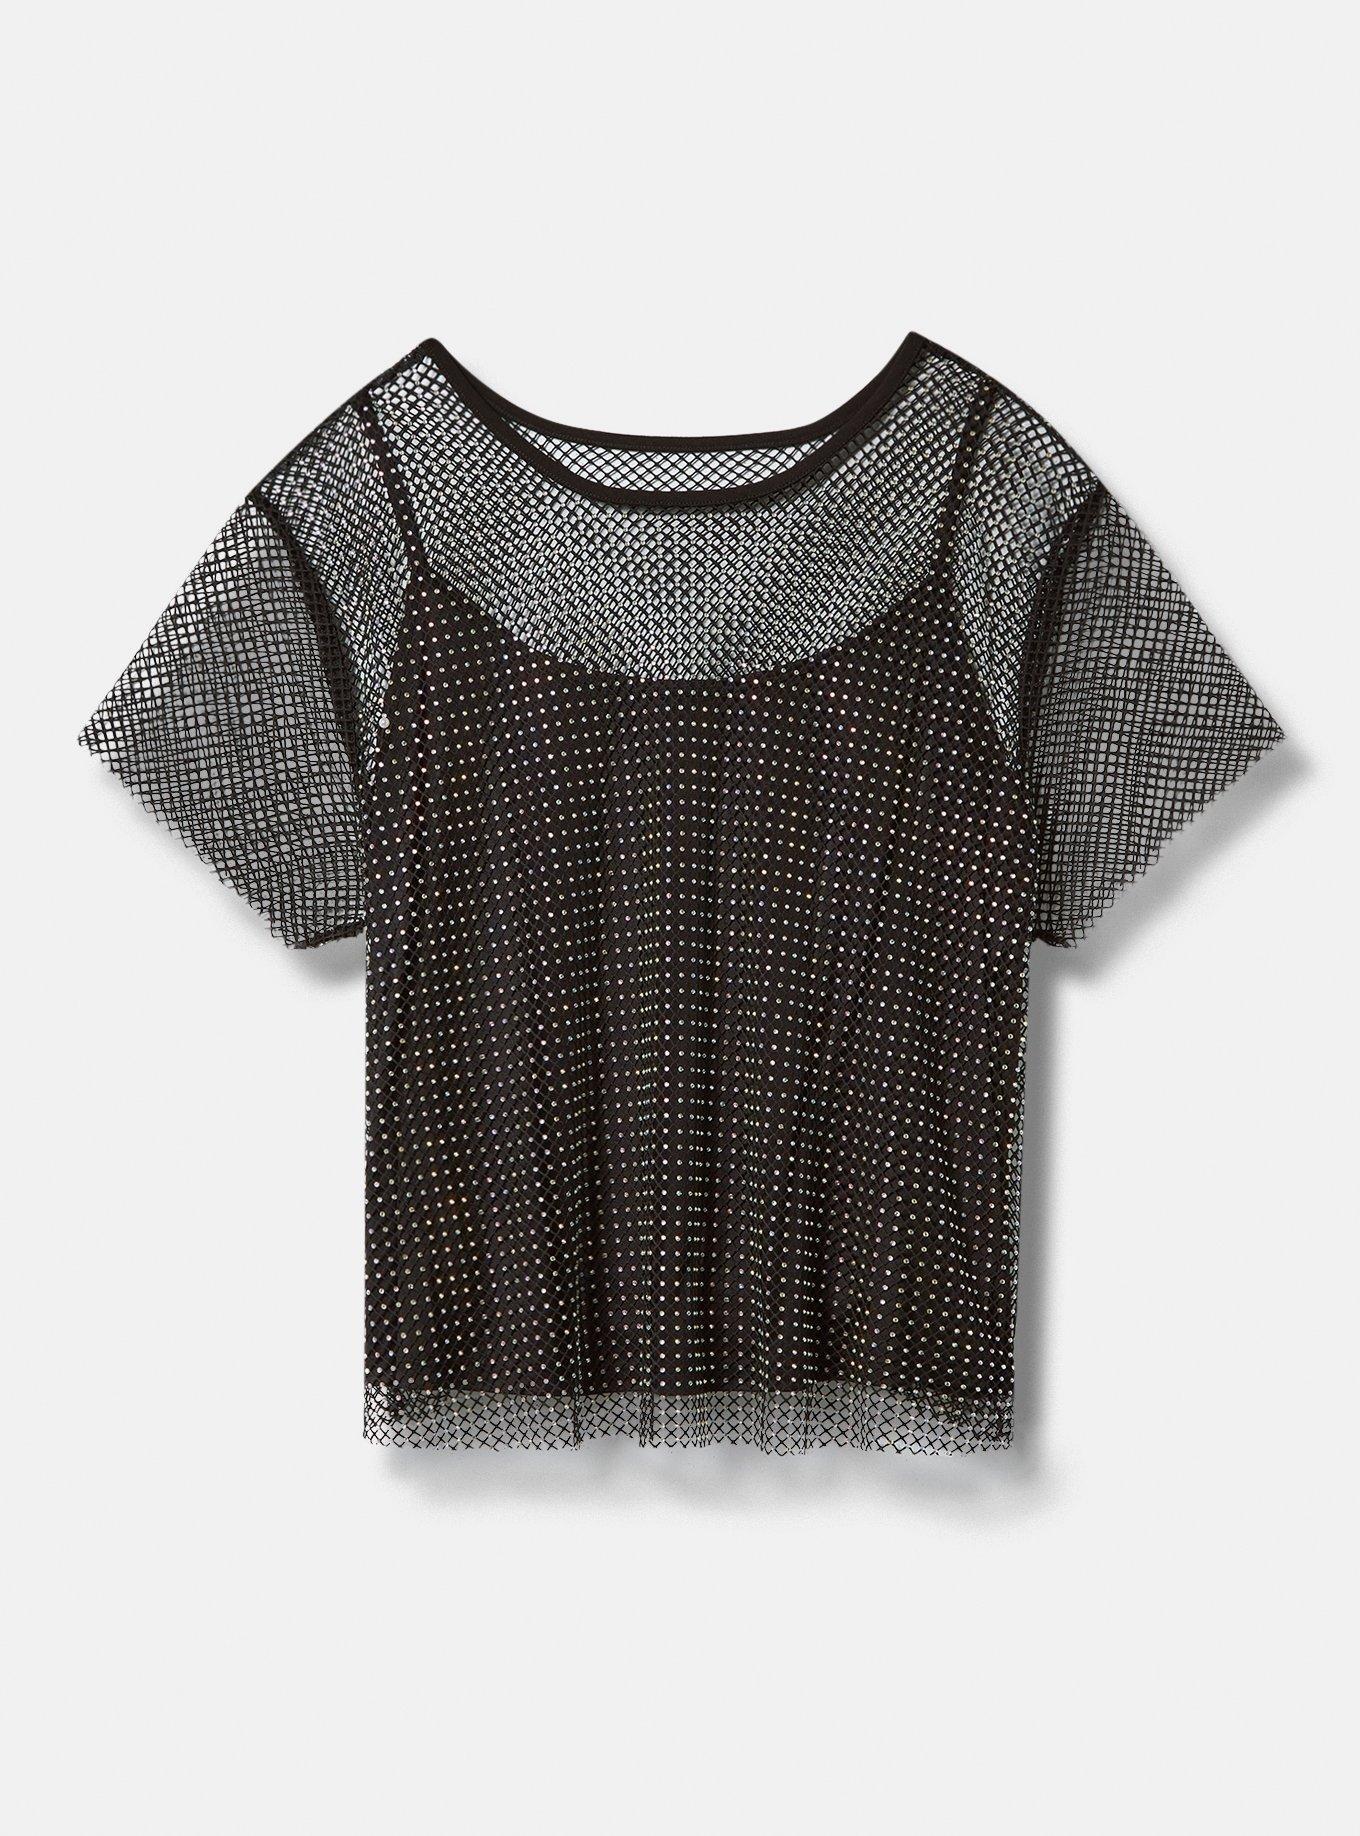 Short Sleeve Women Black Mesh Crop Tops - China T Shirt and Tee Shirt price